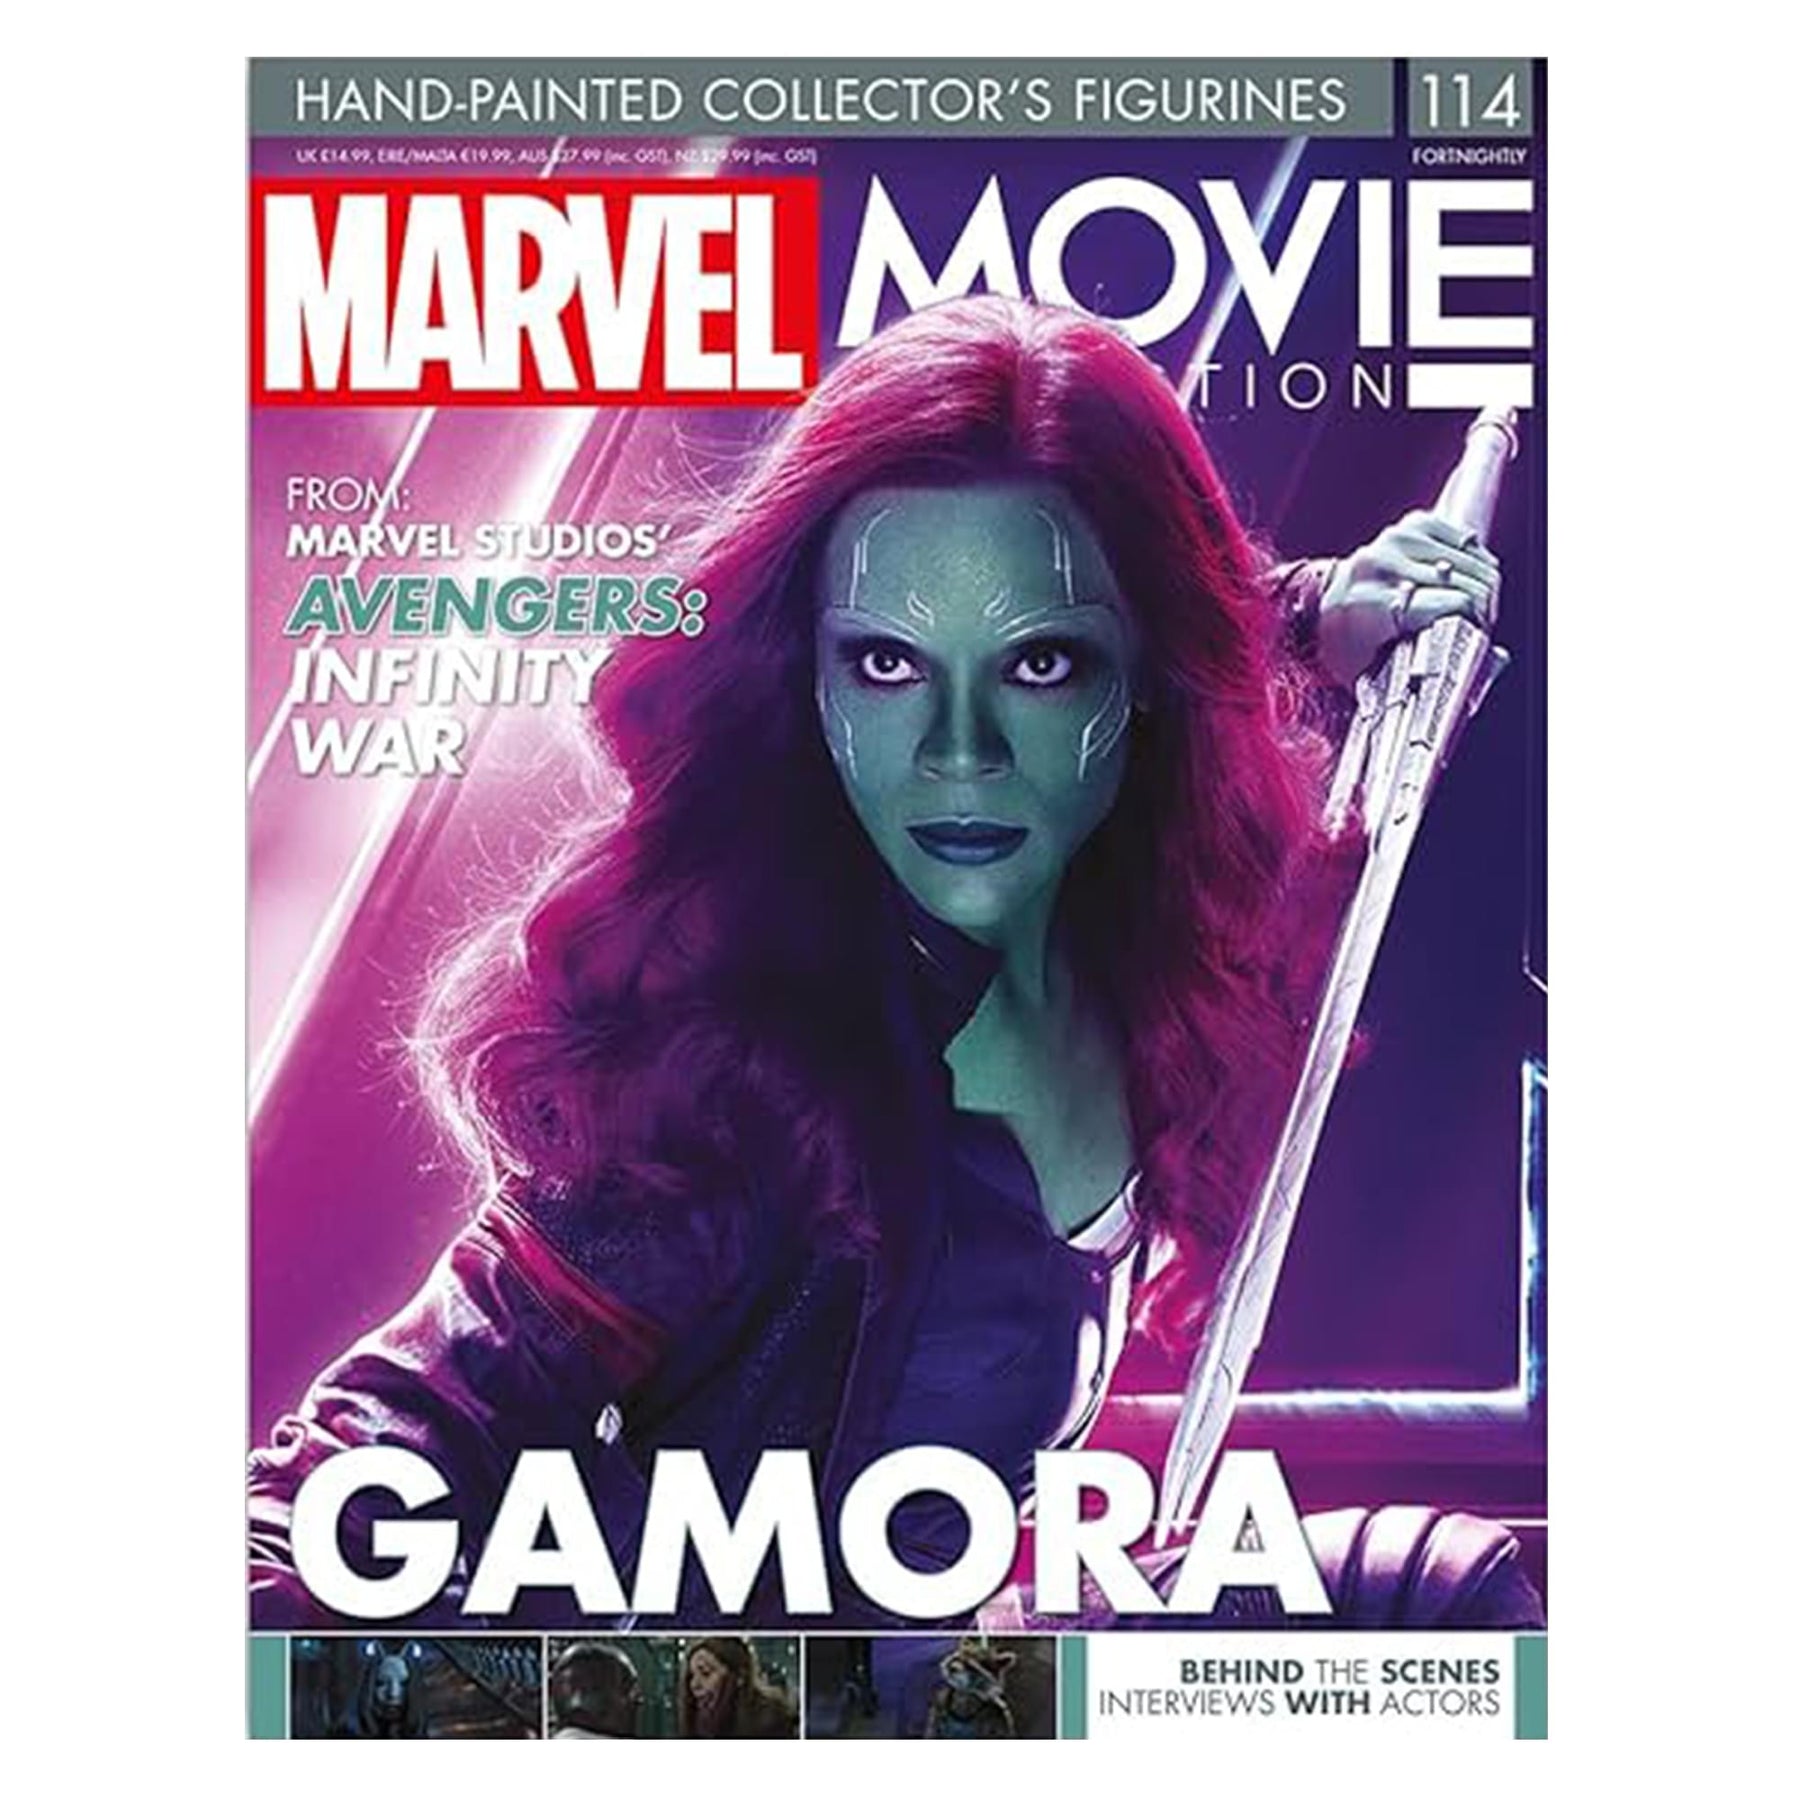 Marvel Movie Collection Magazine Issue #114 Gamora